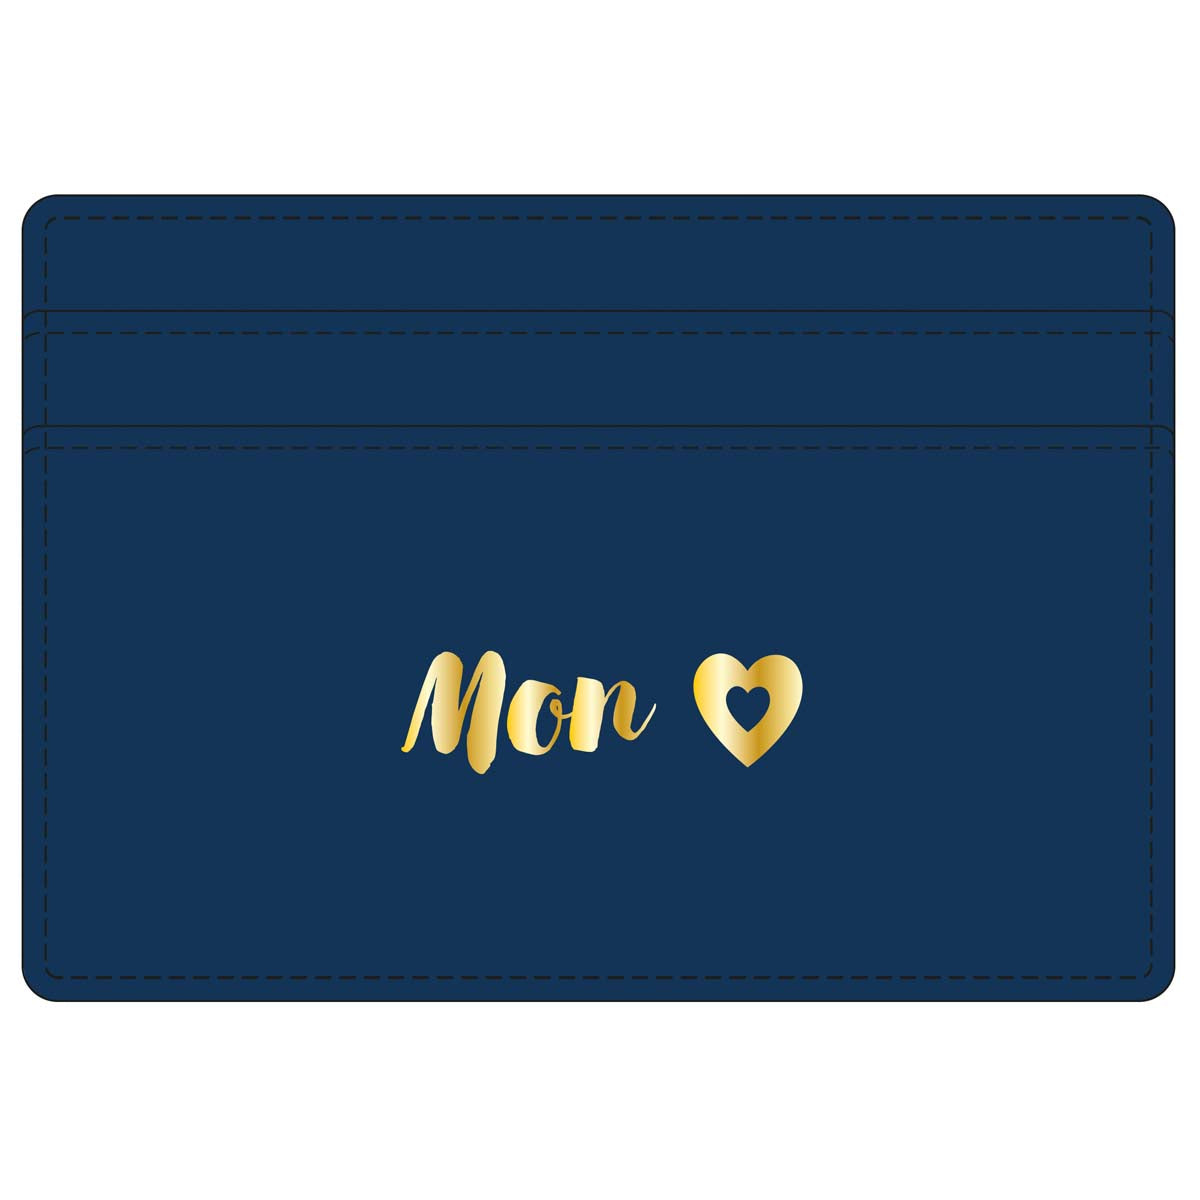 My heart card holder - navy blue